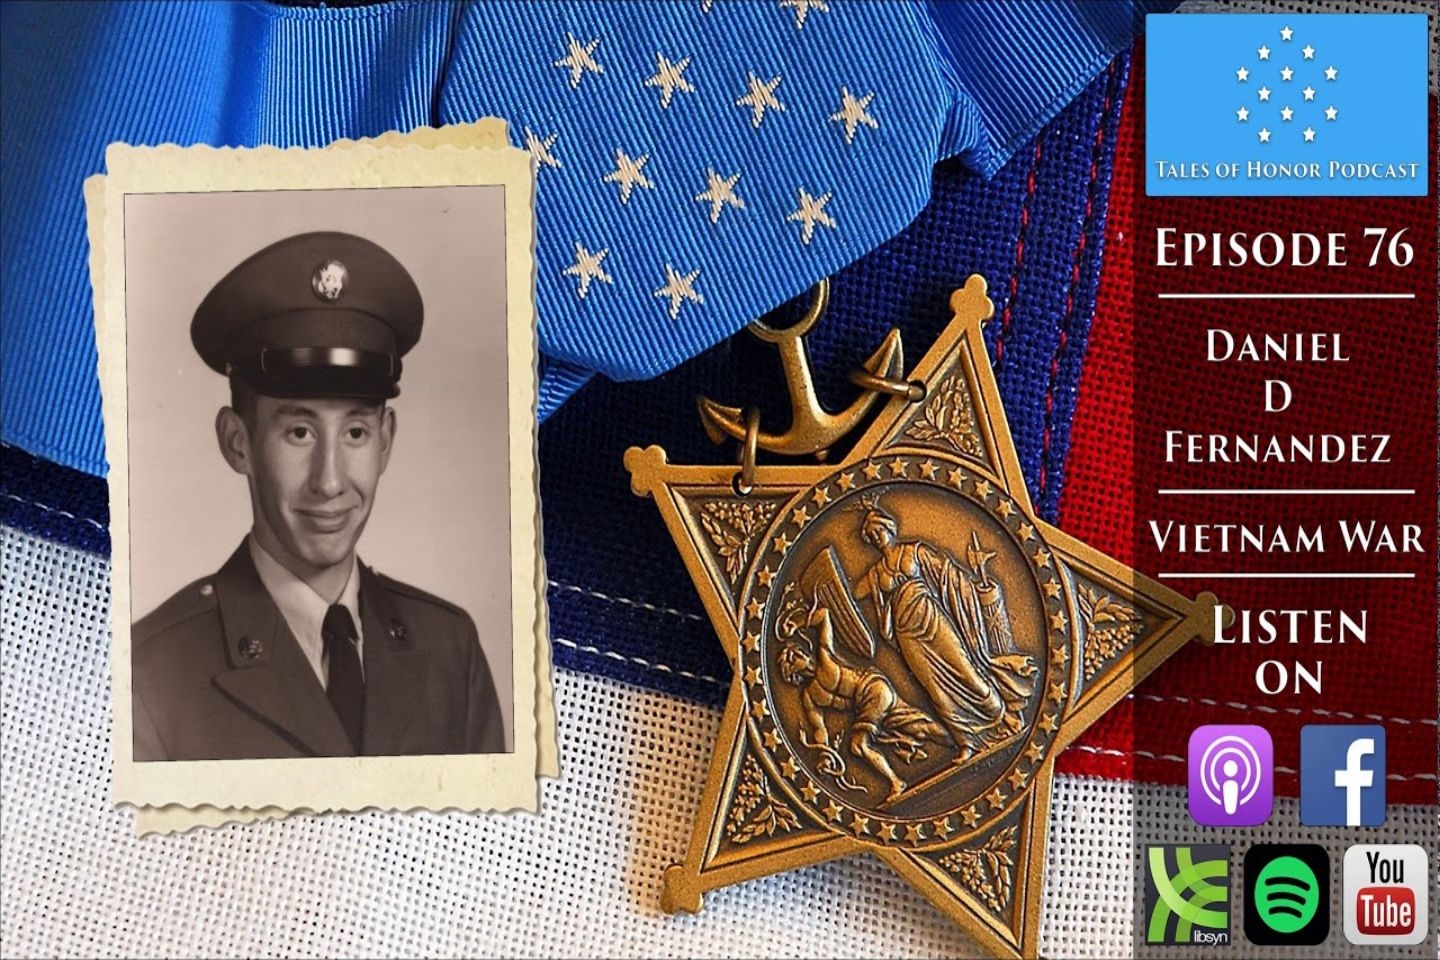 Daniel D Fernandez and Medal of Honor